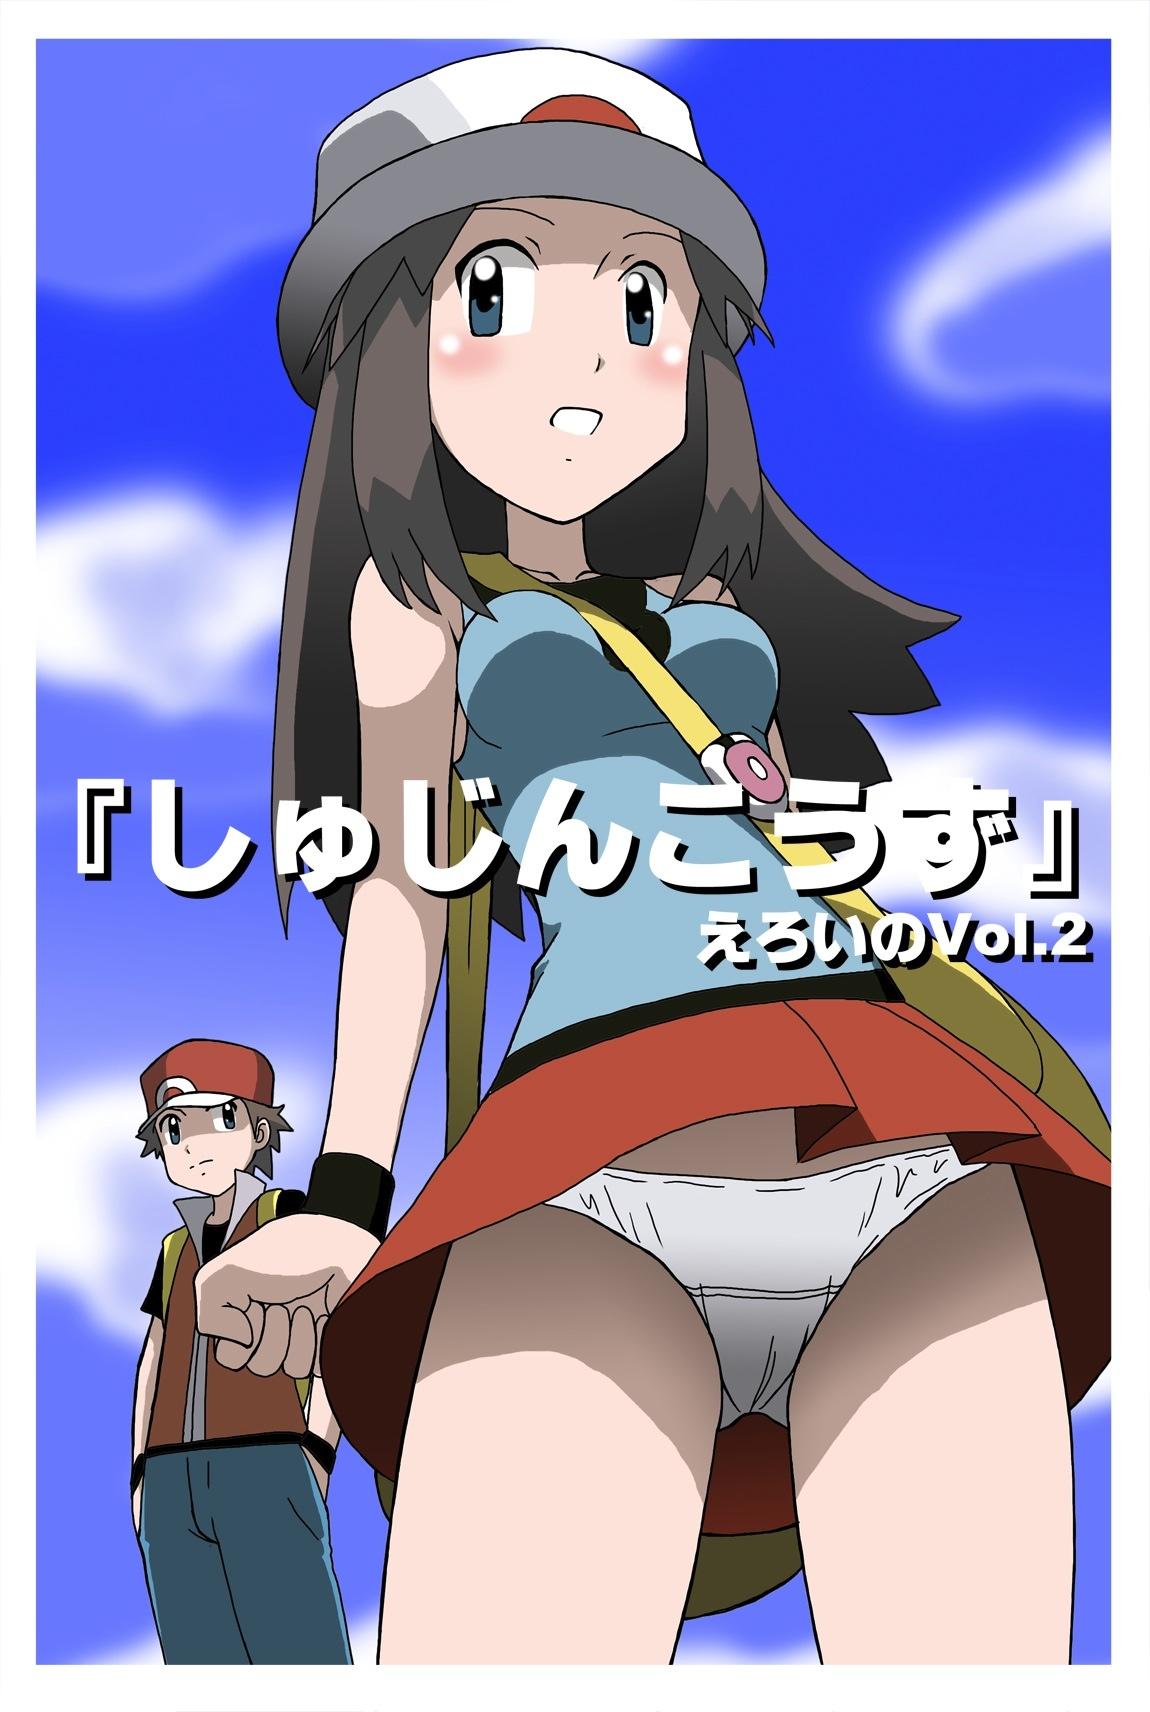 Plumper 「Shujinkouzu」 Eroi no Vol.2 - Pokemon Highheels - Picture 1